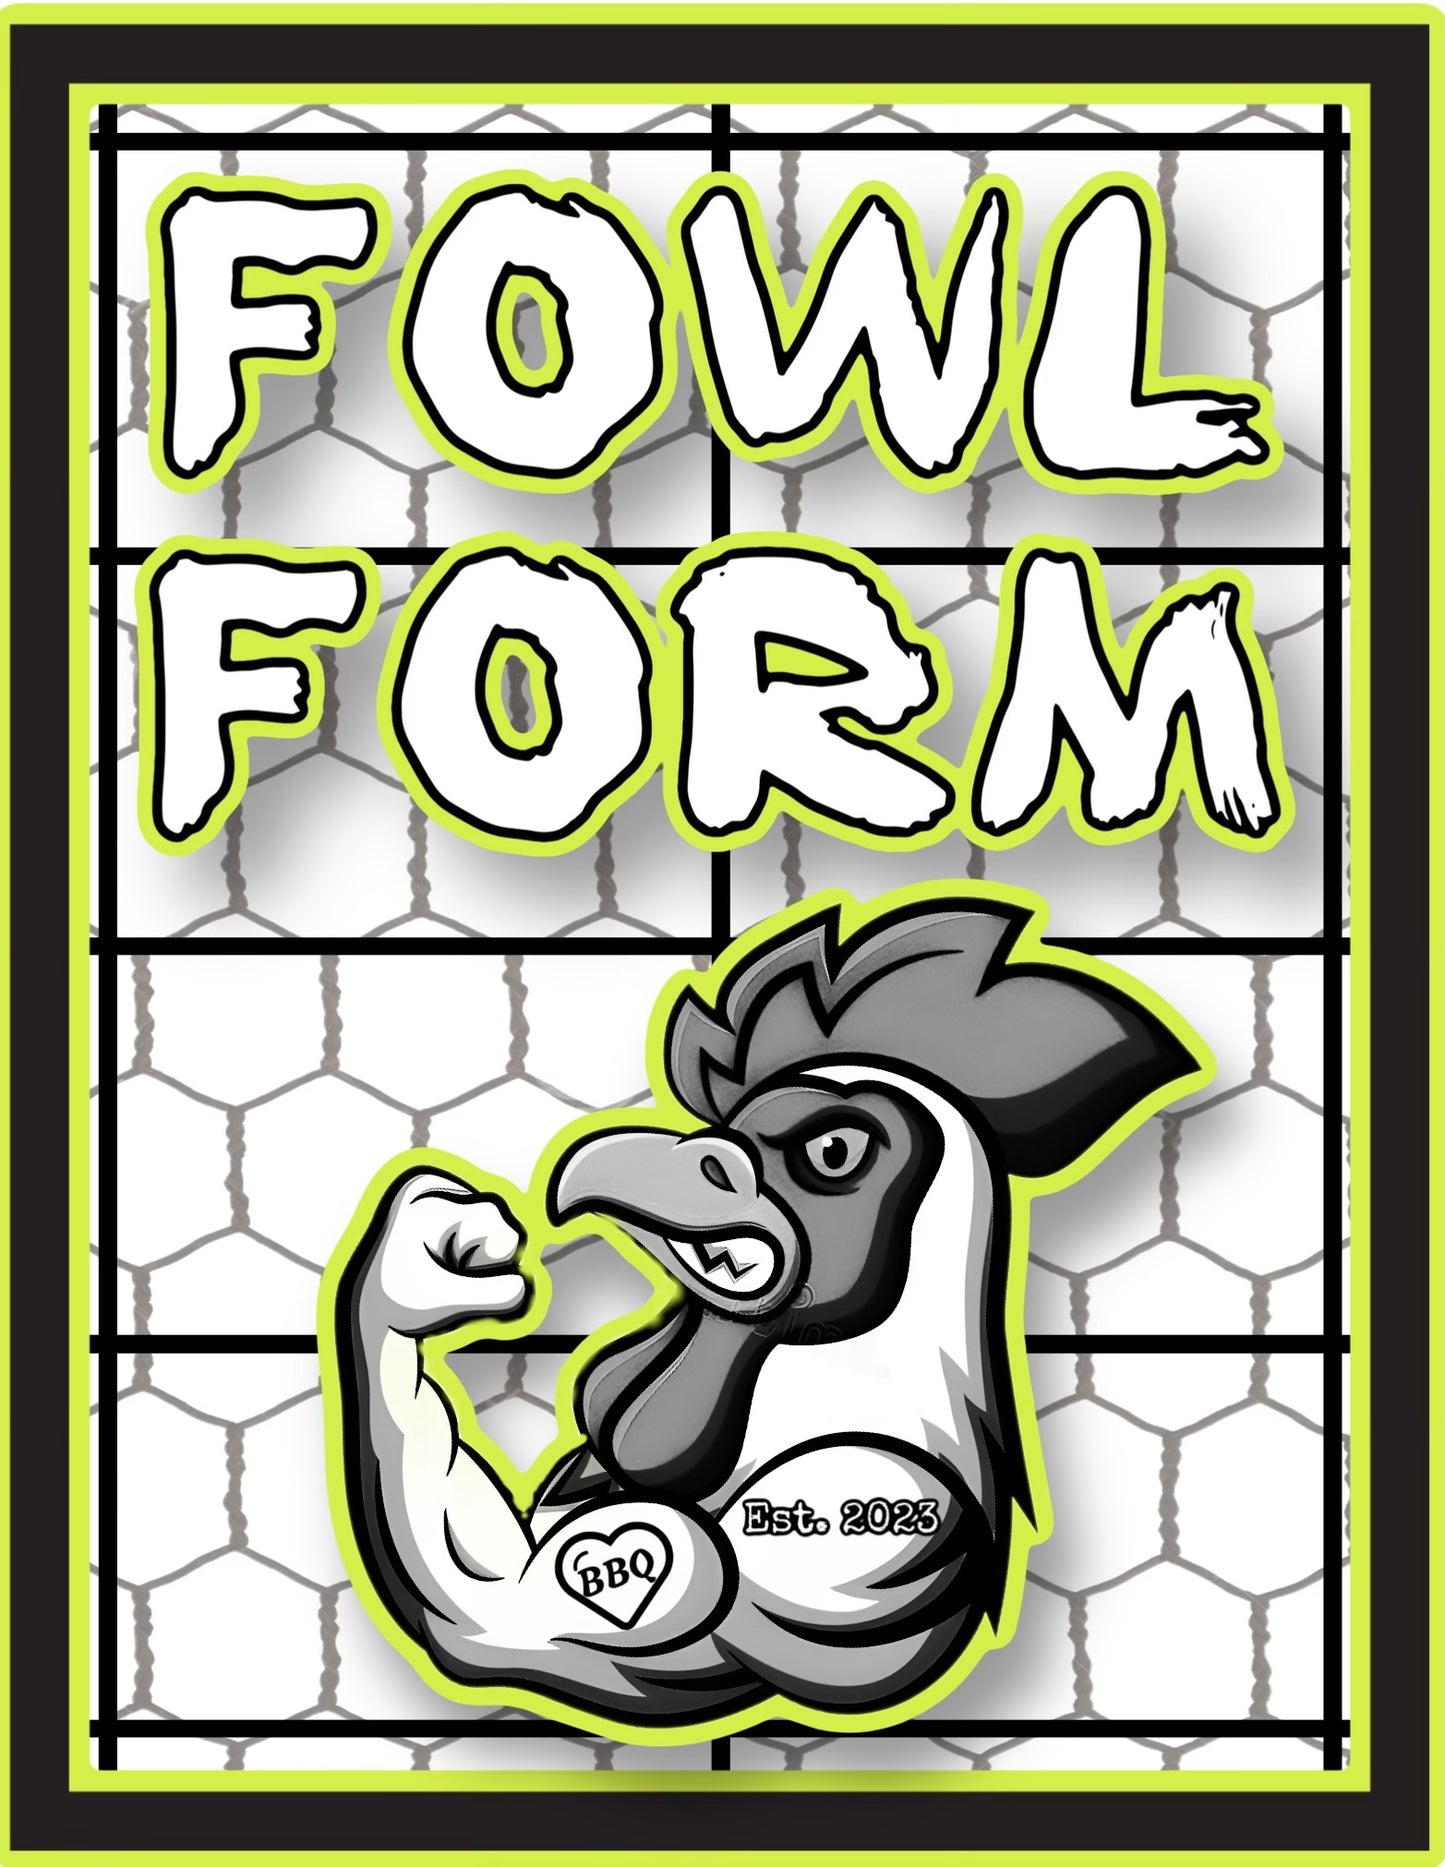 Fowl Form